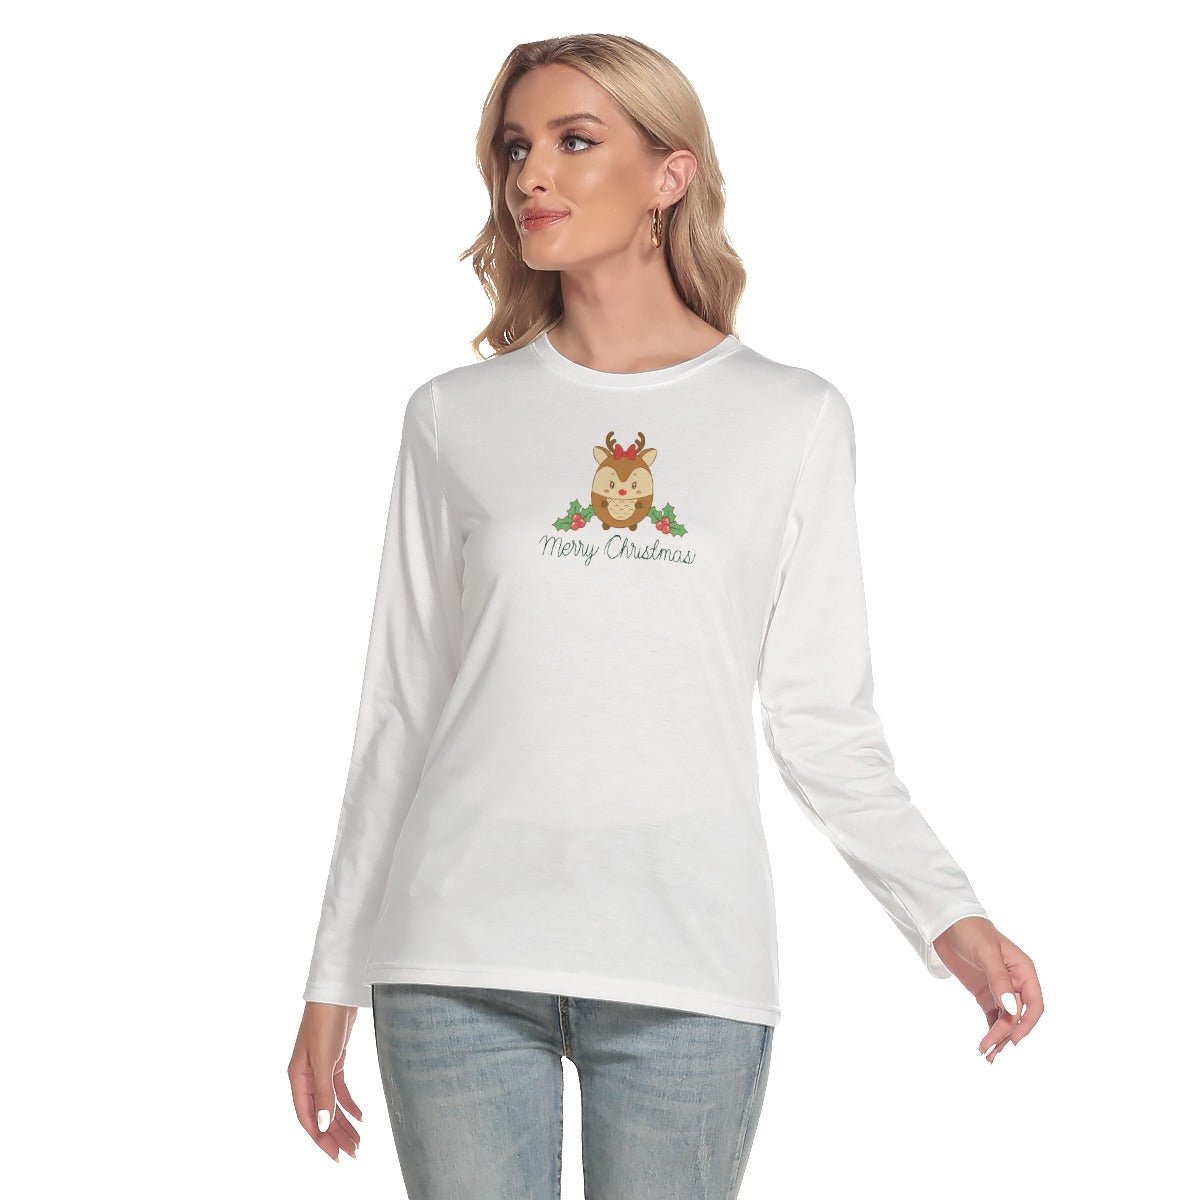 Women's Long Sleeve Christmas T-shirt - Cute Reindeer - Festive Style